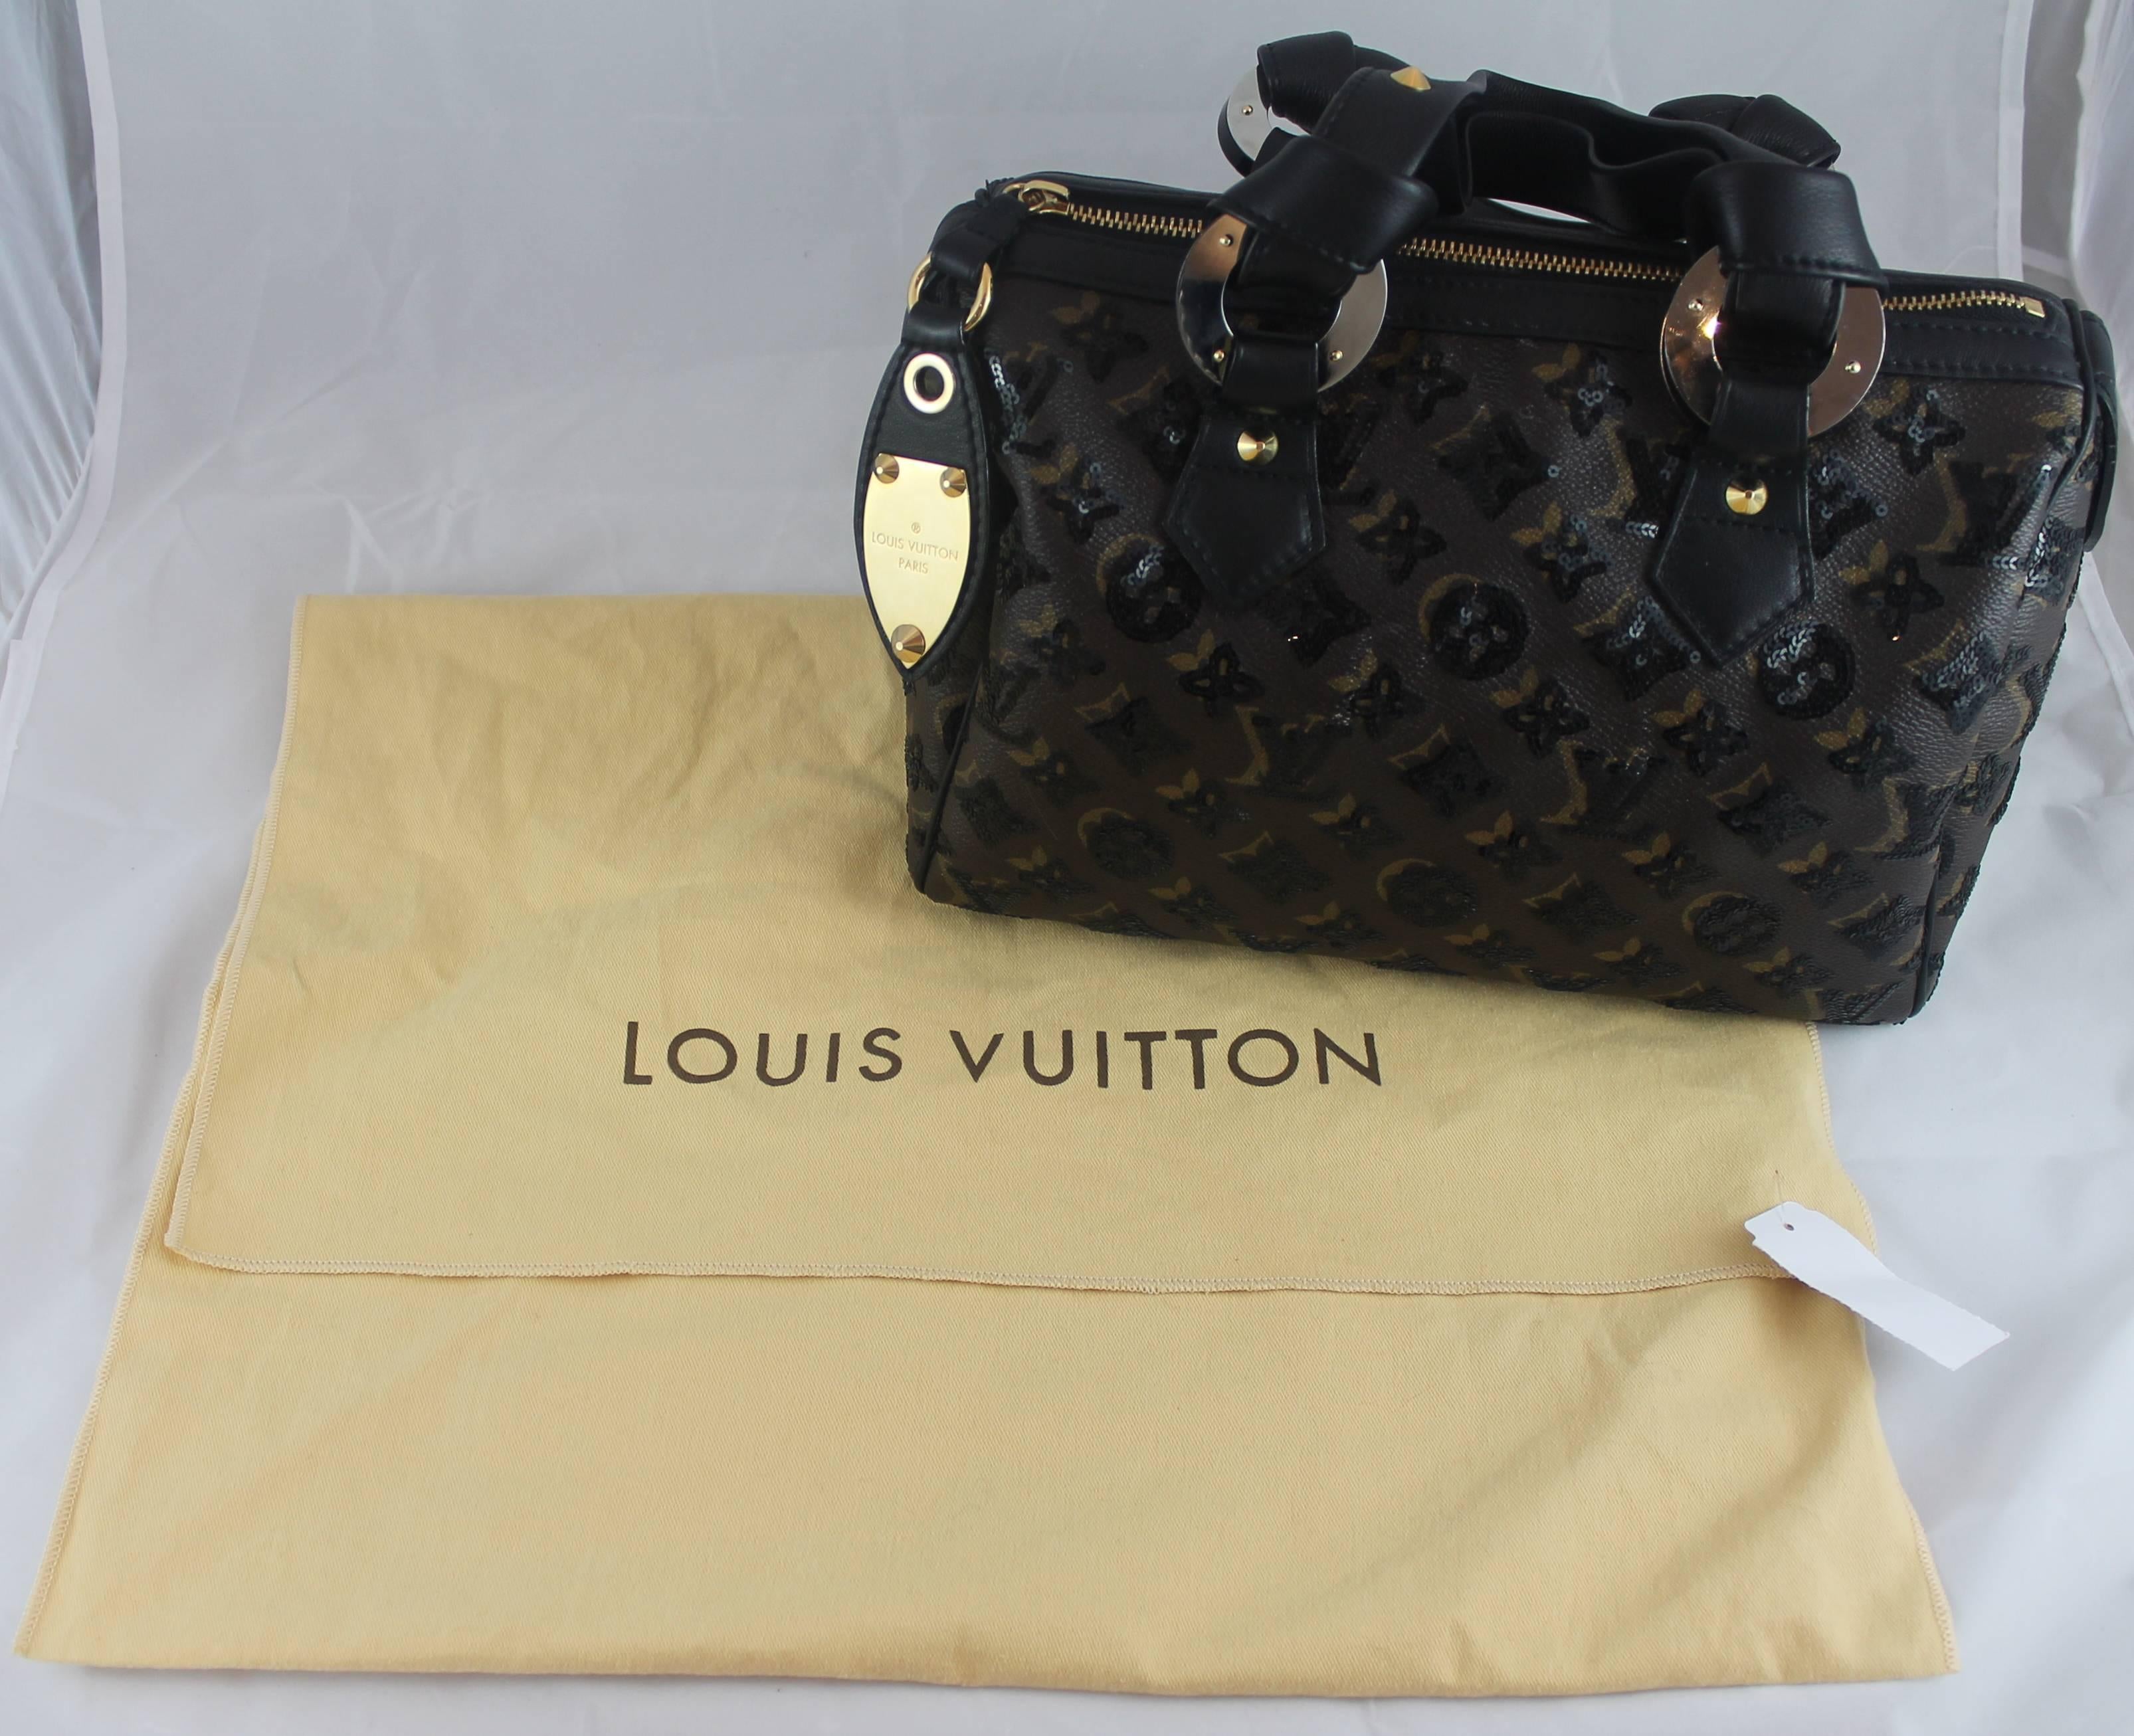 Louis Vuitton Limited Edition Monogram Eclipse Speedy Noir Bag - 2009 - NWT 1